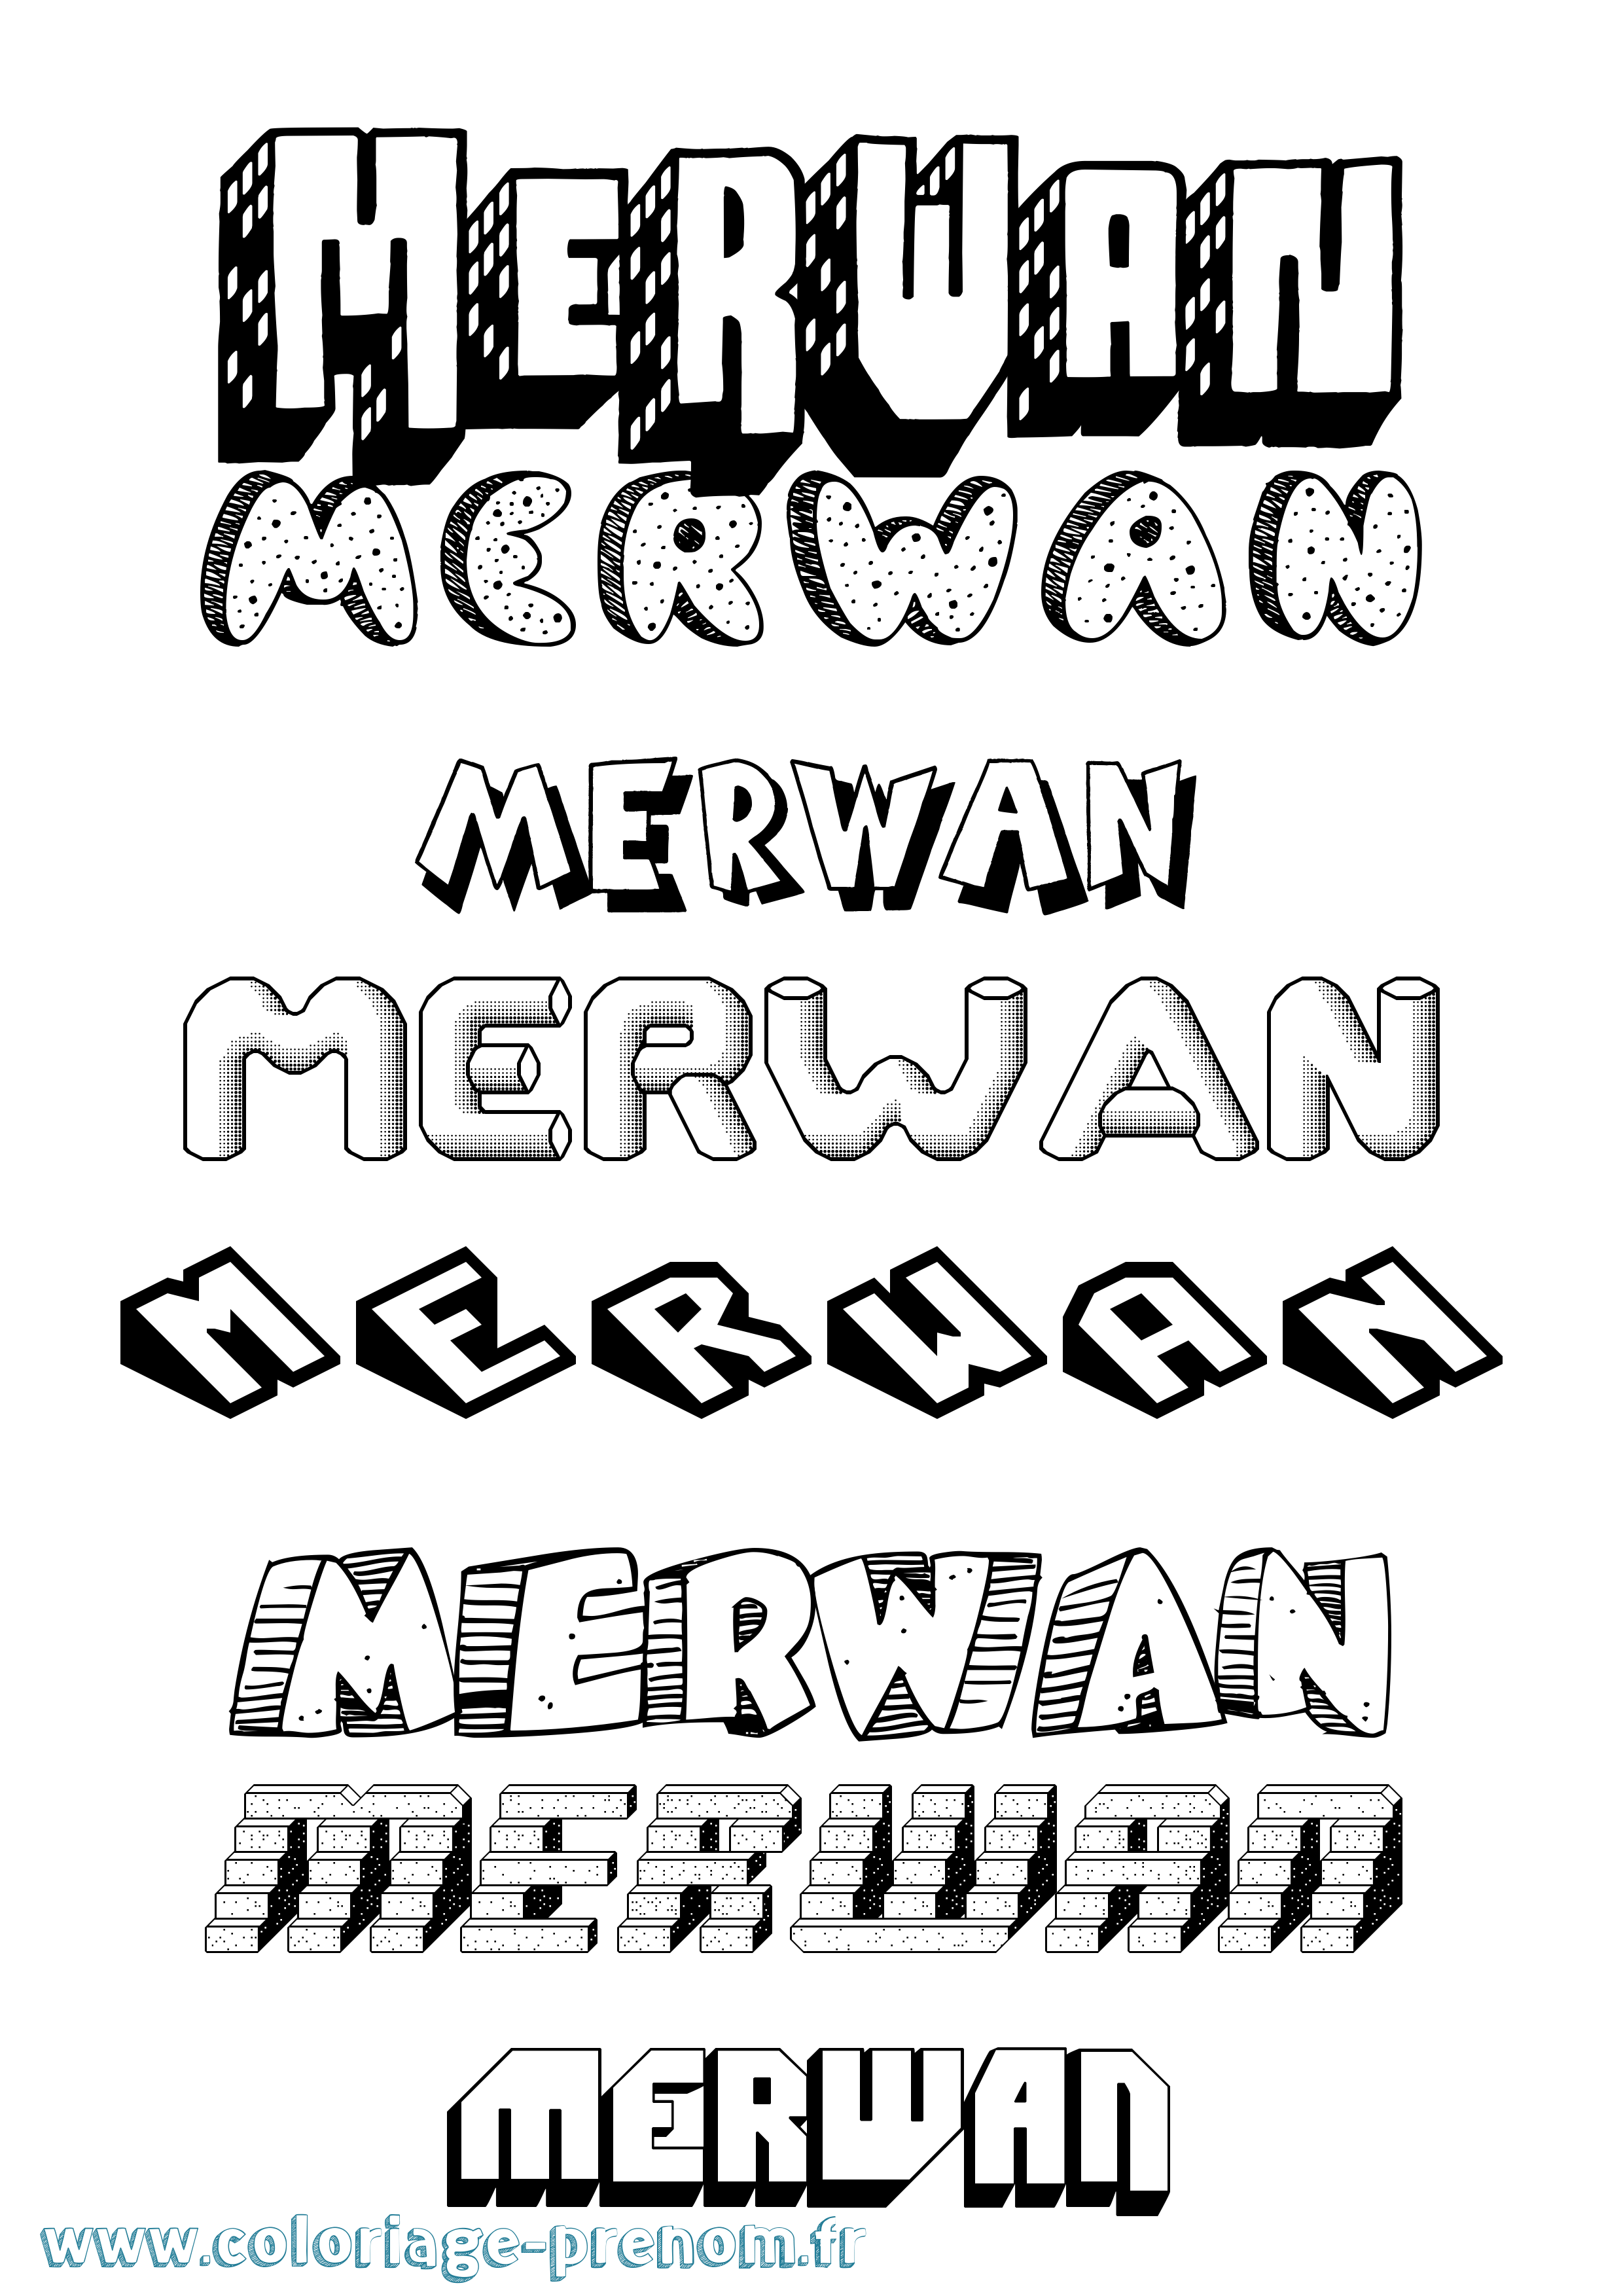 Coloriage prénom Merwan